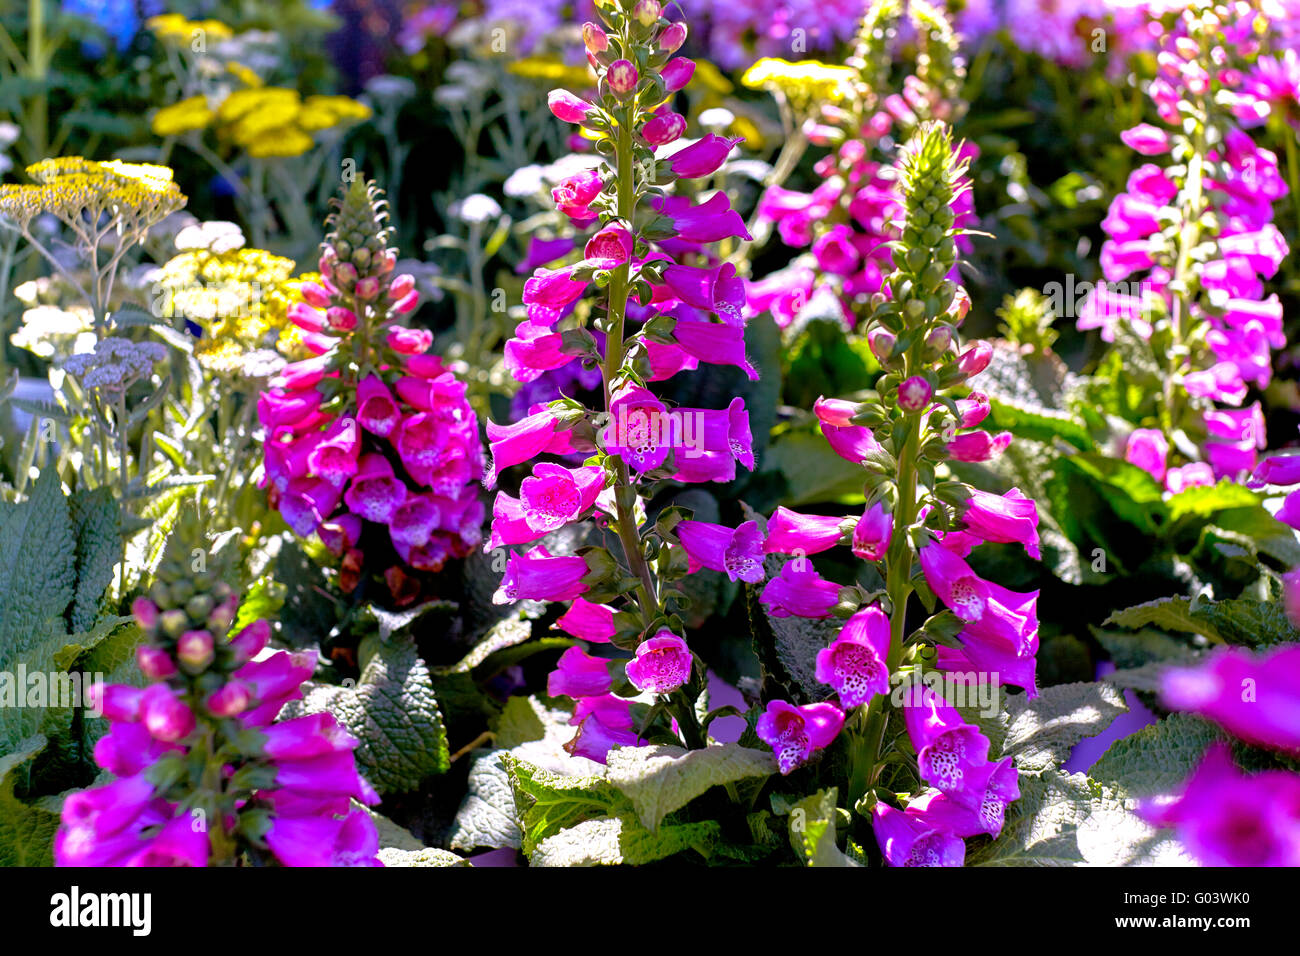 Pink Foxglove Flowers in a Garden Stock Photo